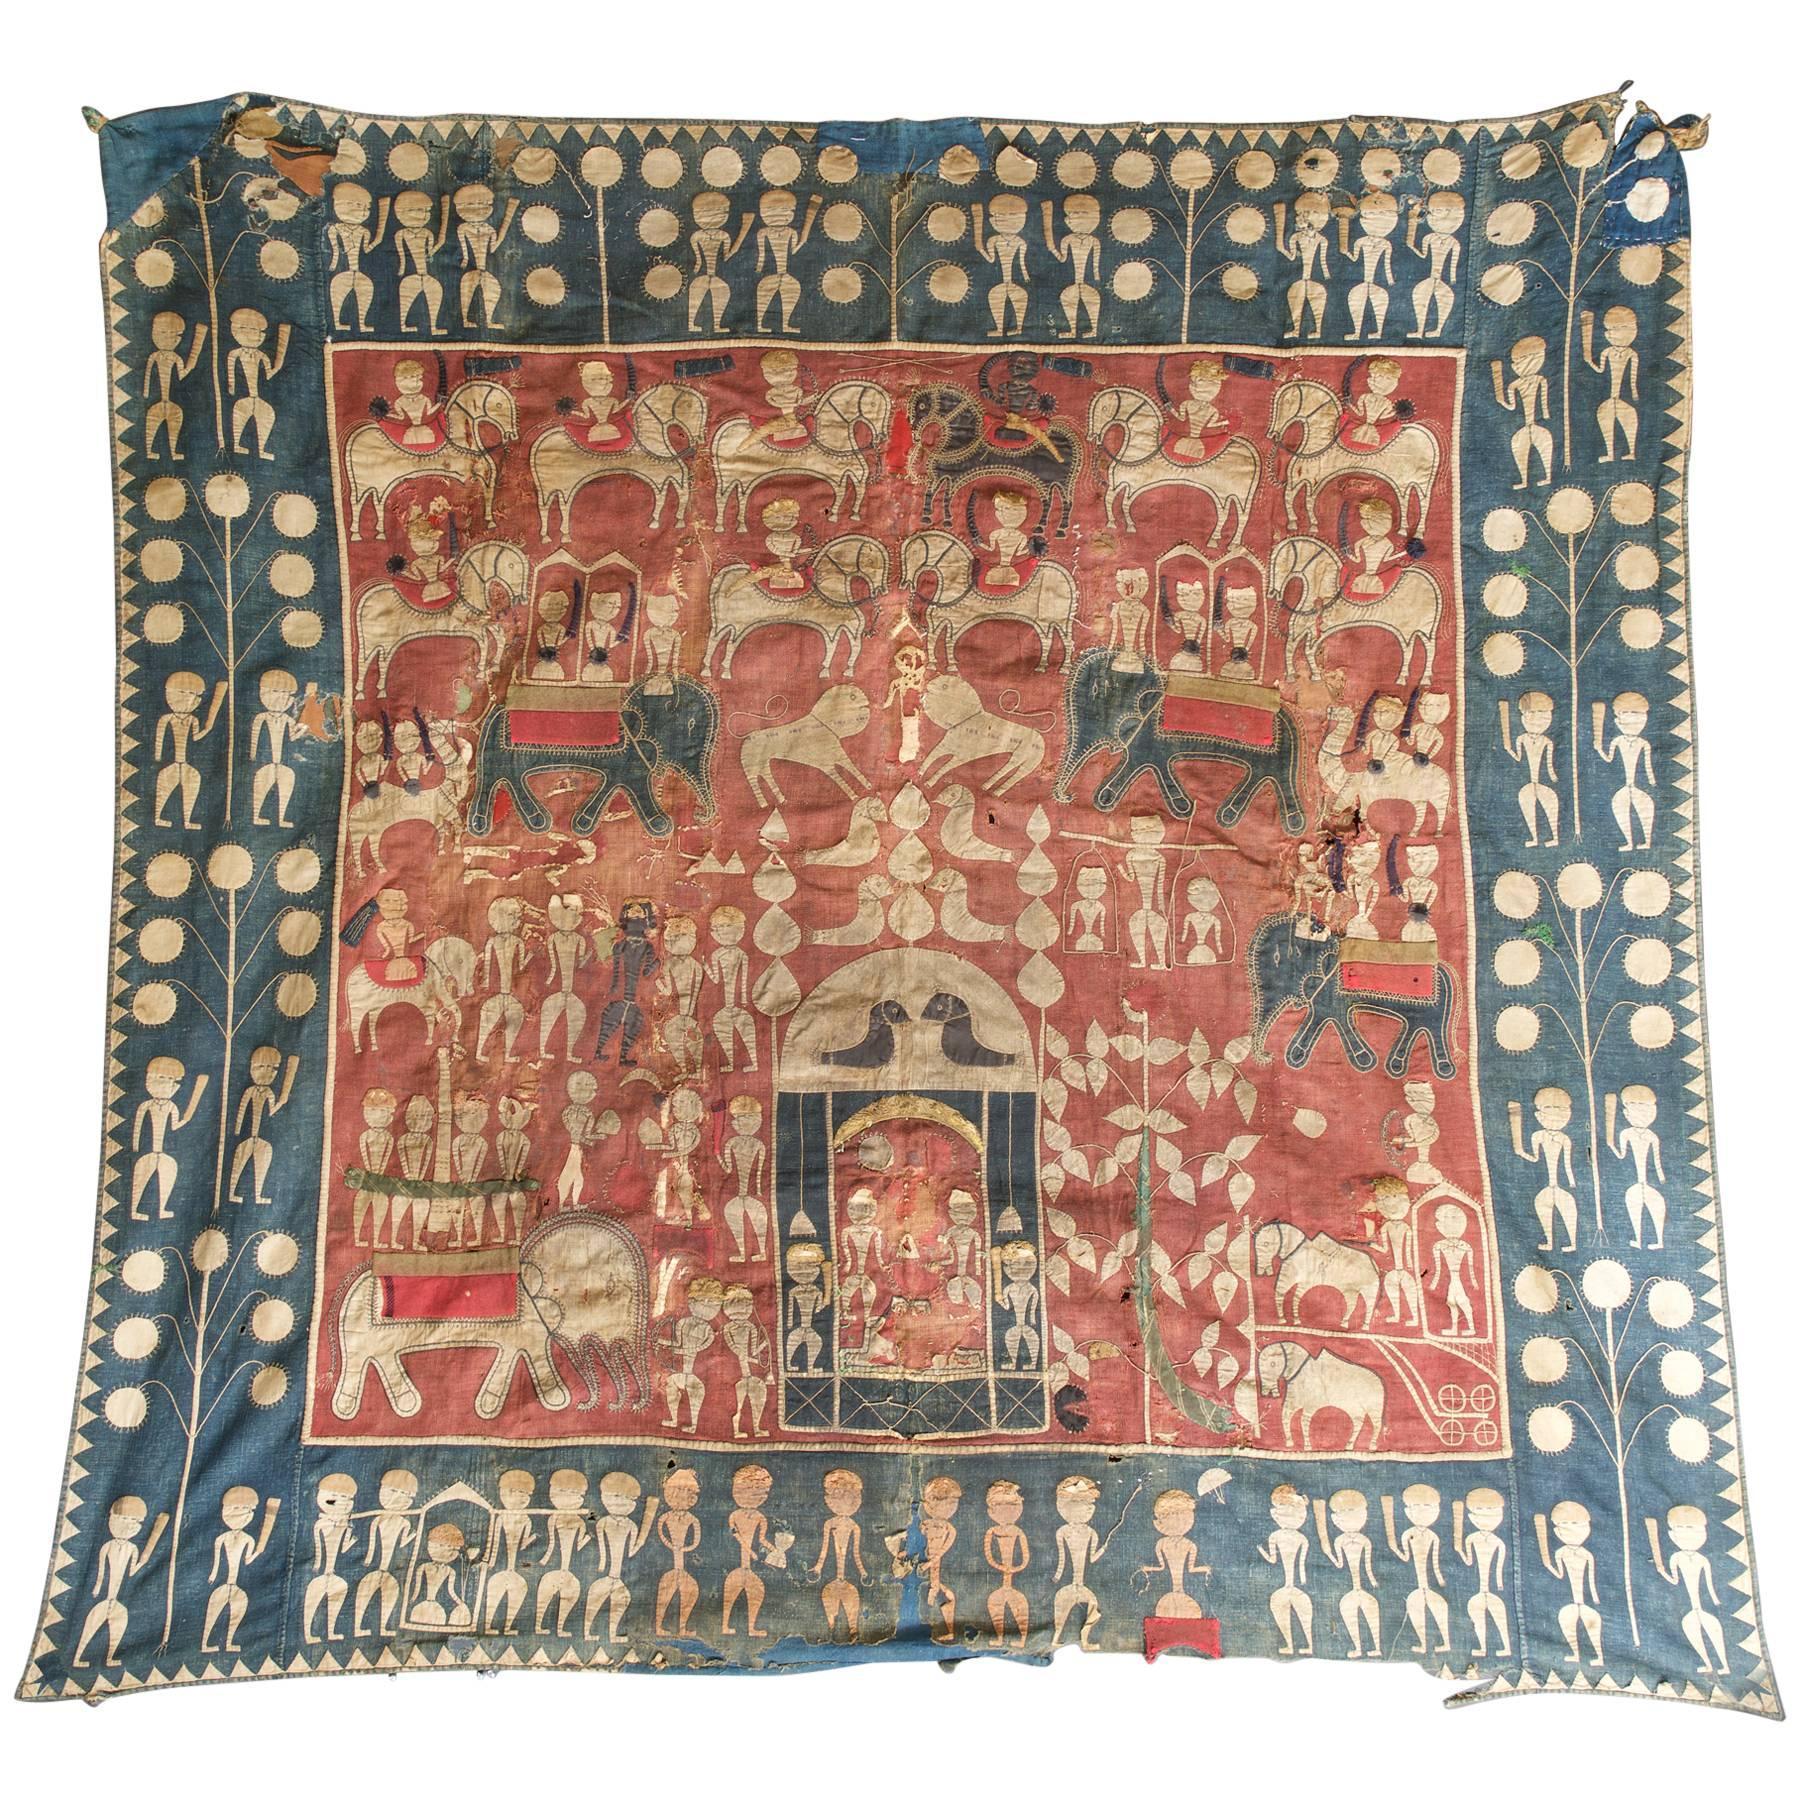 Indigo African Asian Bohemian Embroidery Tapestry Elephants Horses Kings